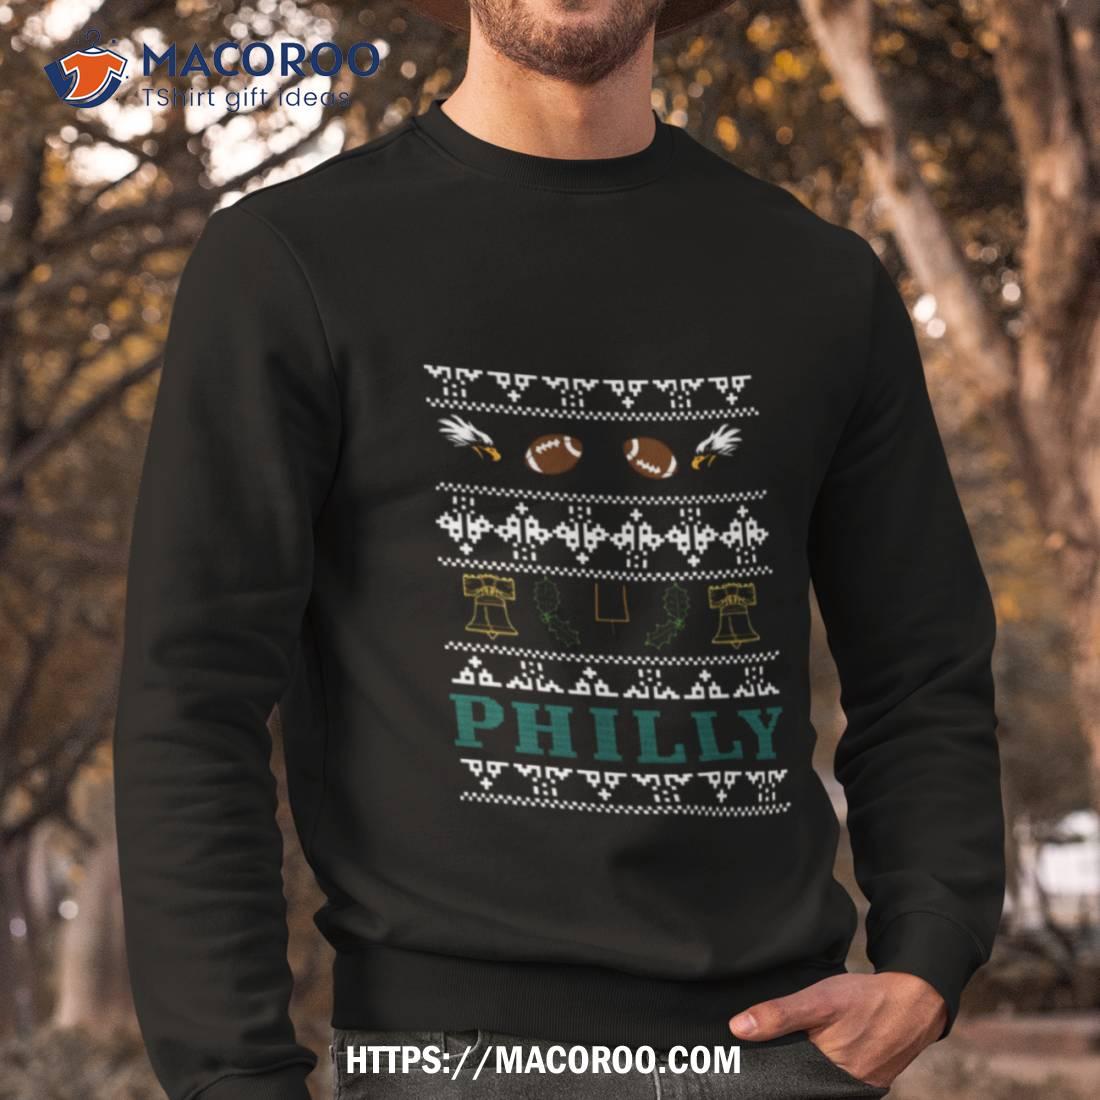 A Philly Special Christmas T-Shirt Funny Philadelphia Eagles Shirt For  Christmas